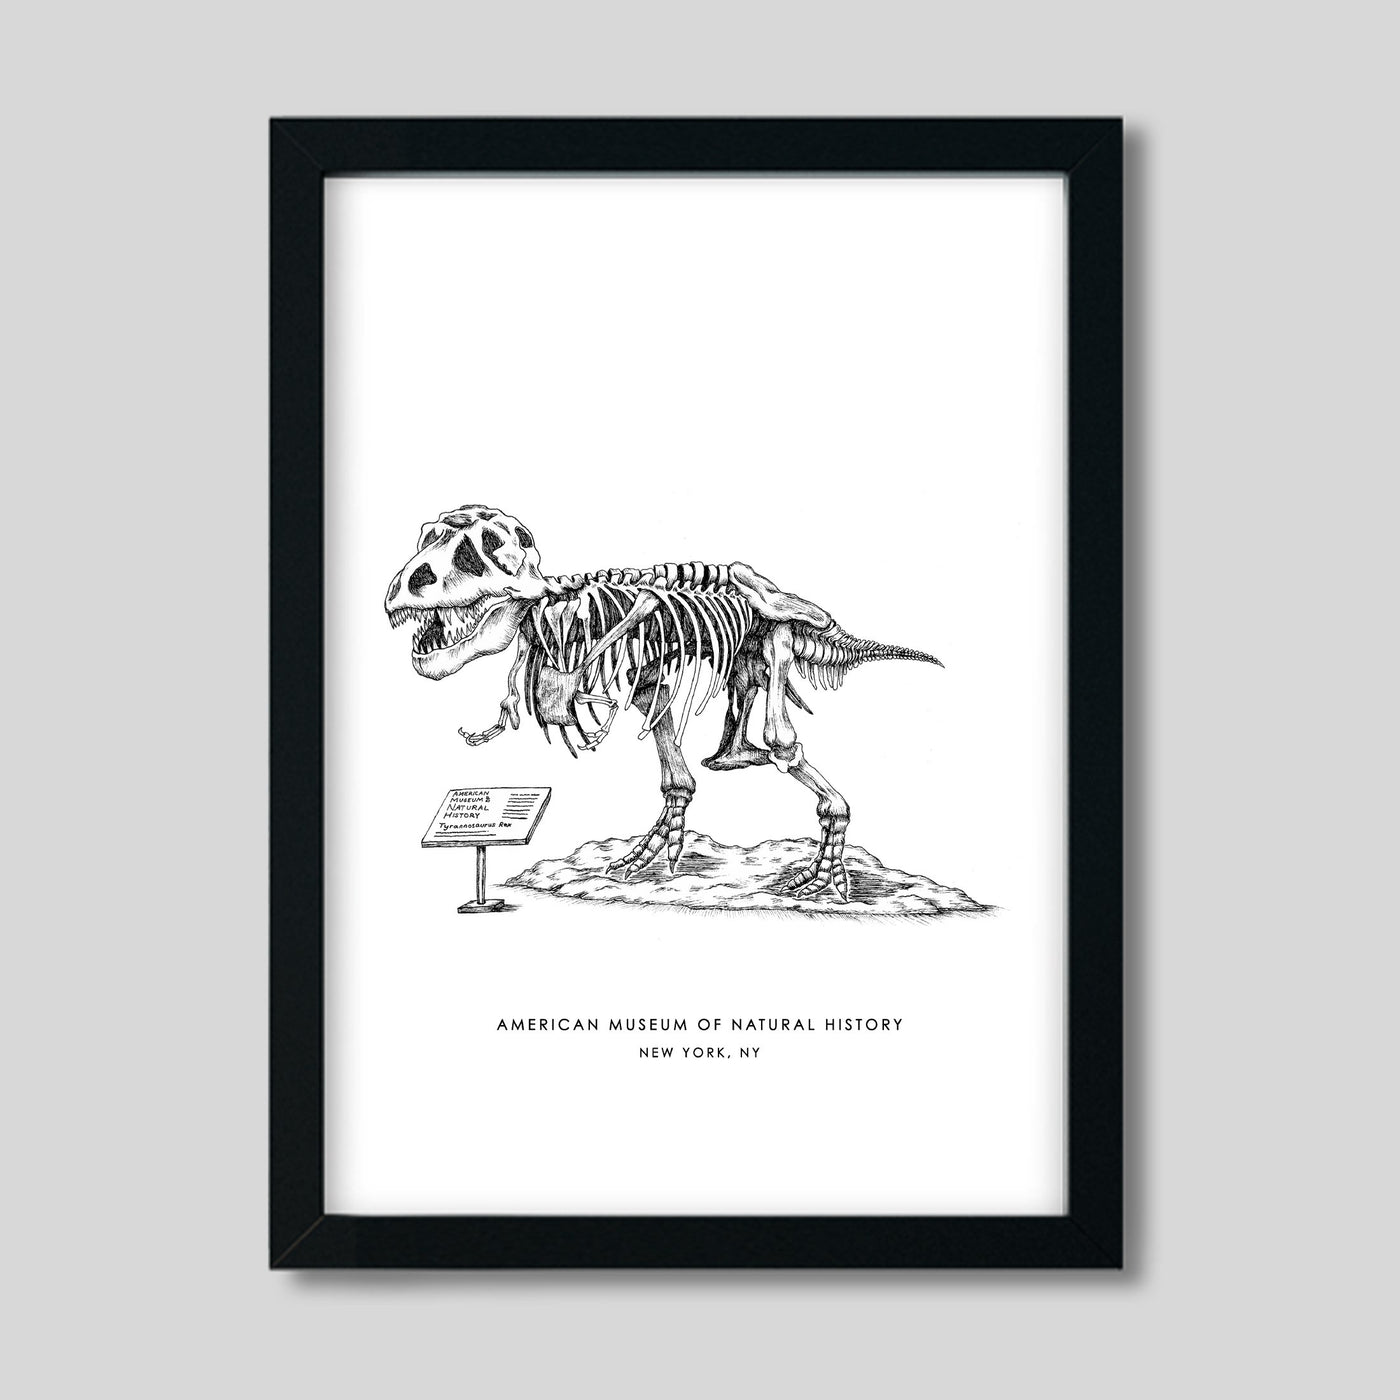 Gallery Prints Black Print / 8x10 / Black Frame New York Dinosaur Print Katie Kime